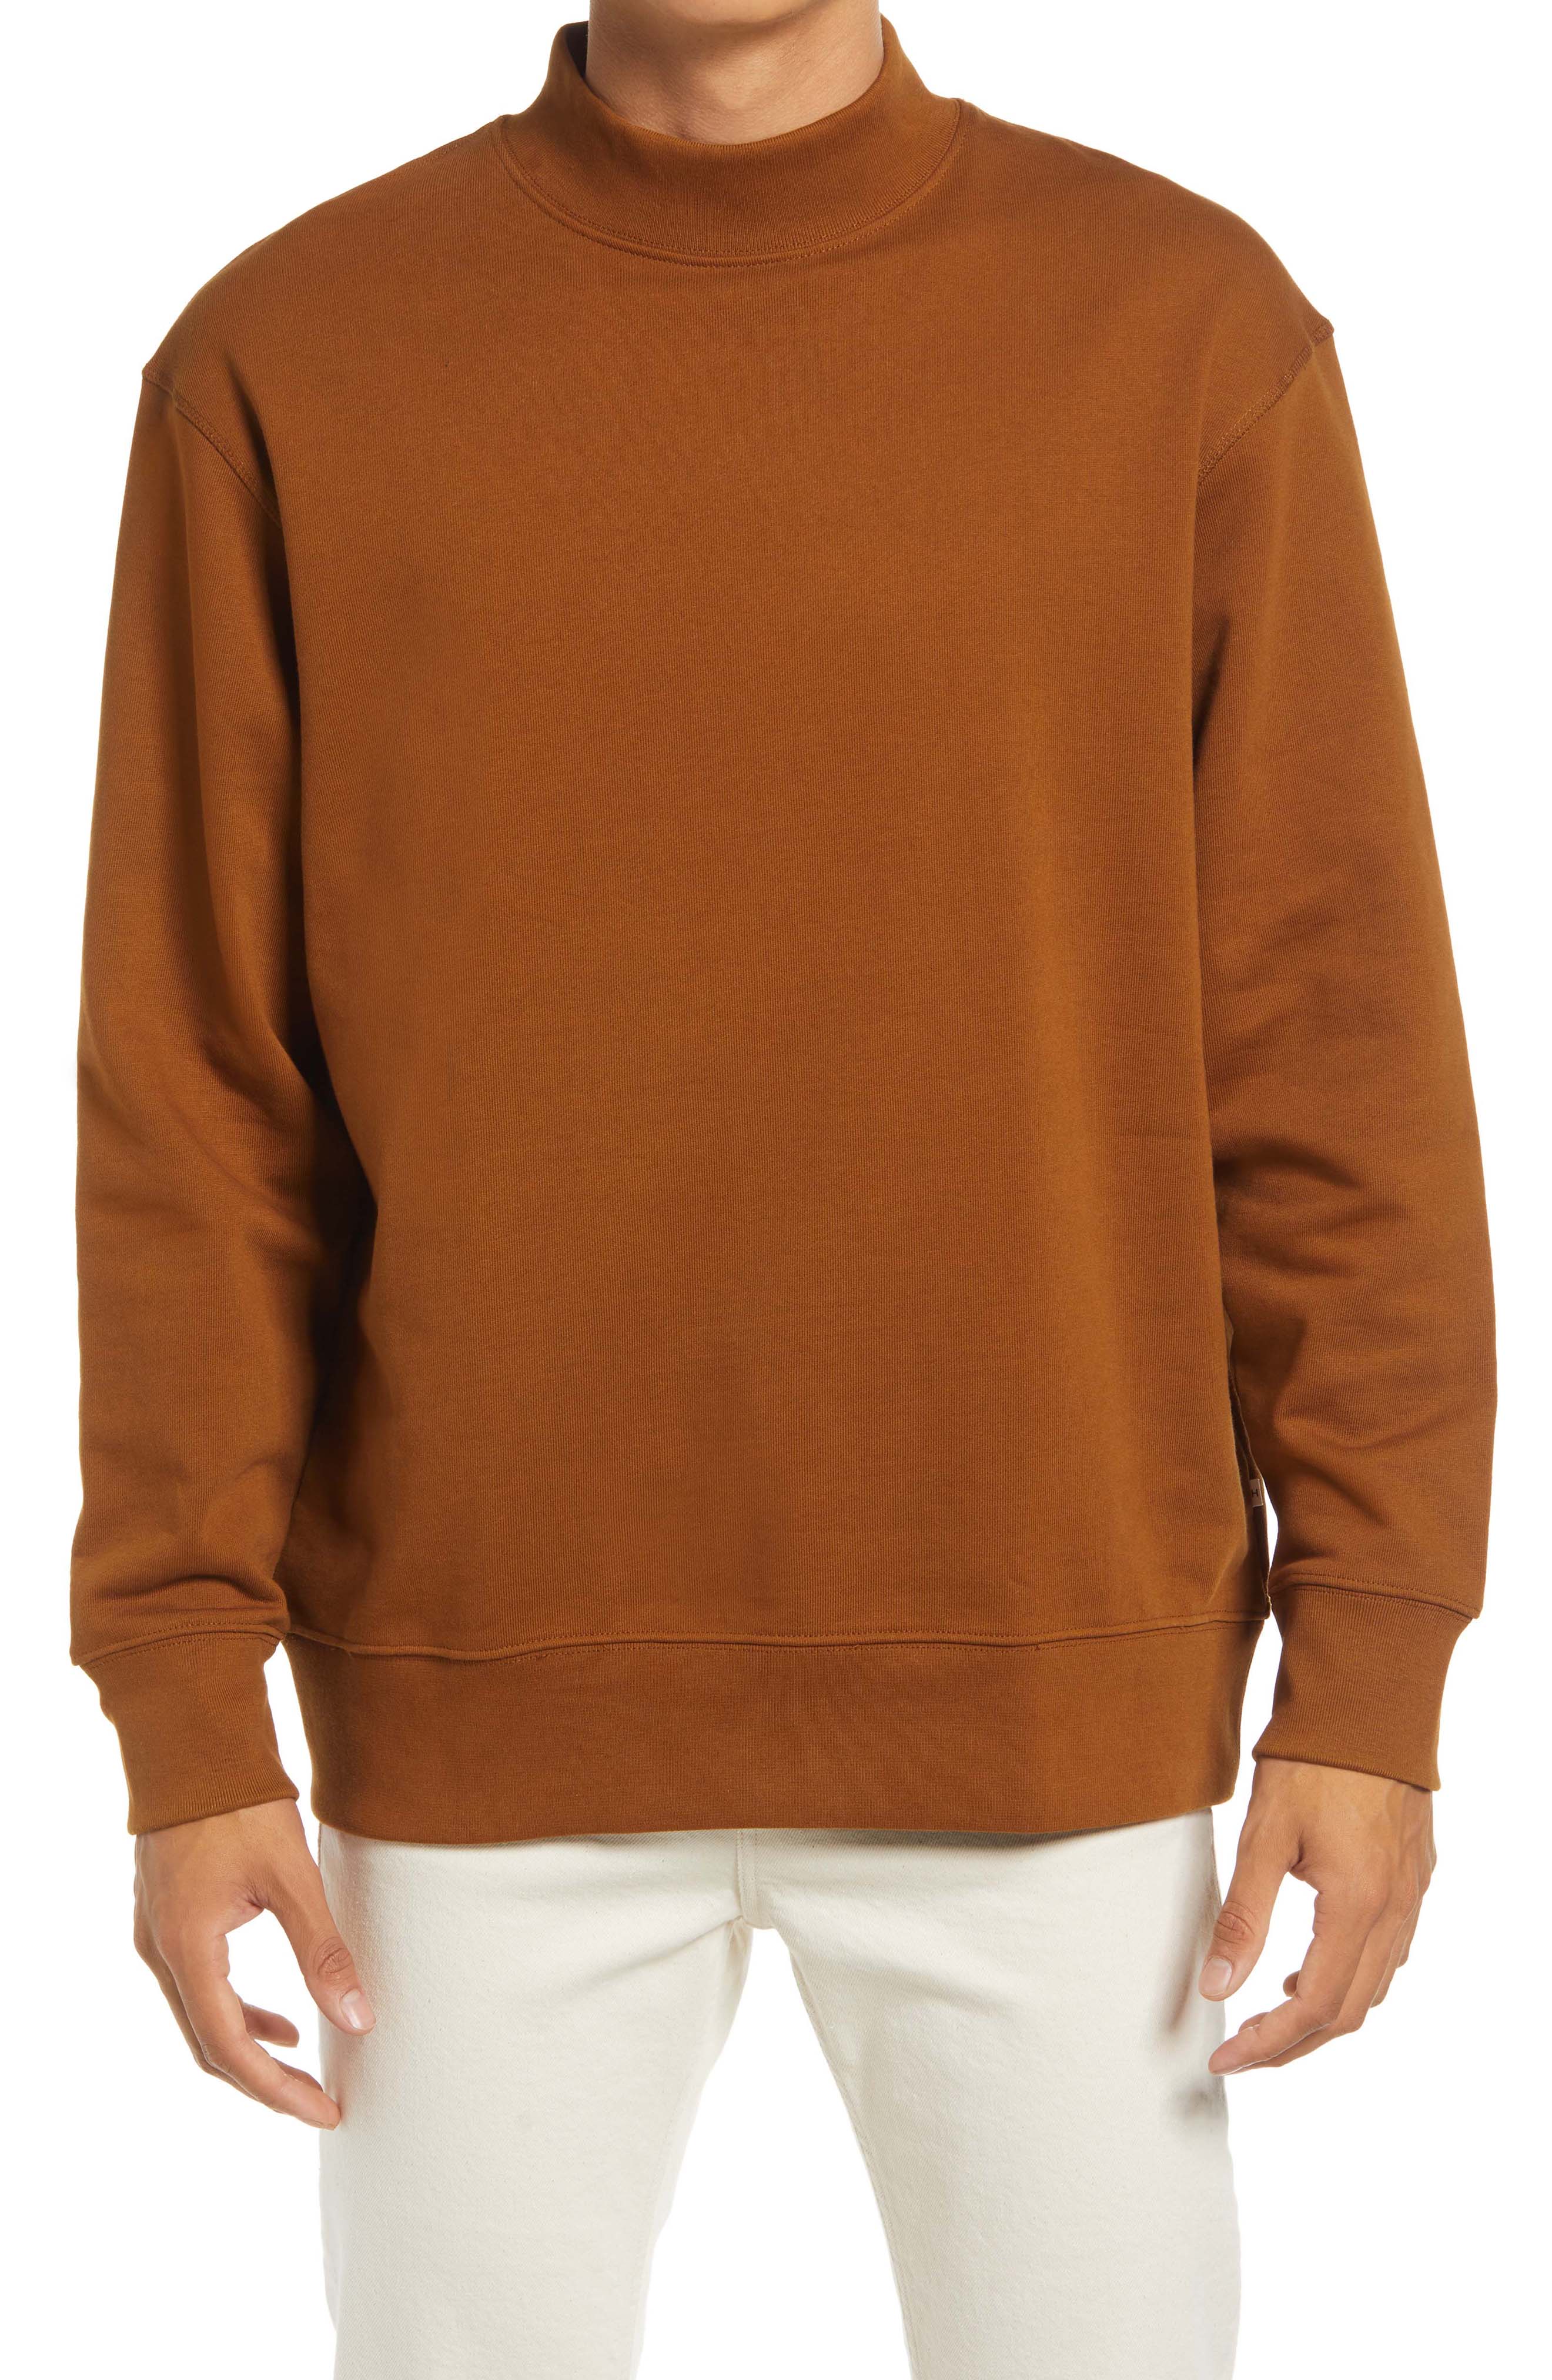 Men’s Retro Workout Clothes | Tracksuits, Sweatshirts Mens Selected Homme Dawson Mock Neck Organic Cotton Sweater Size XX-Large - Brown $75.00 AT vintagedancer.com